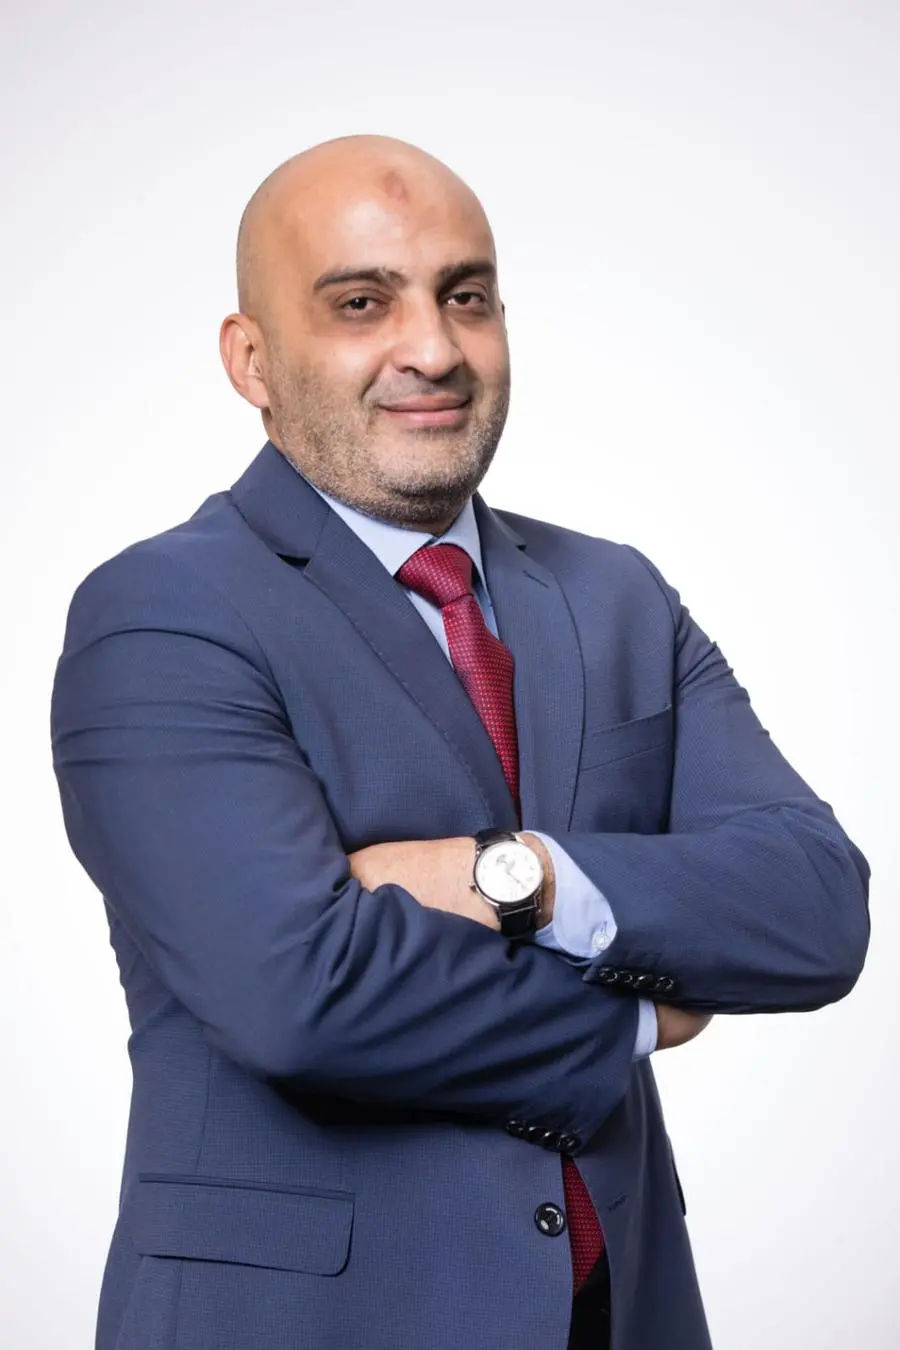 Ramy Salah El Din, Alstom's Managing Director for Egypt